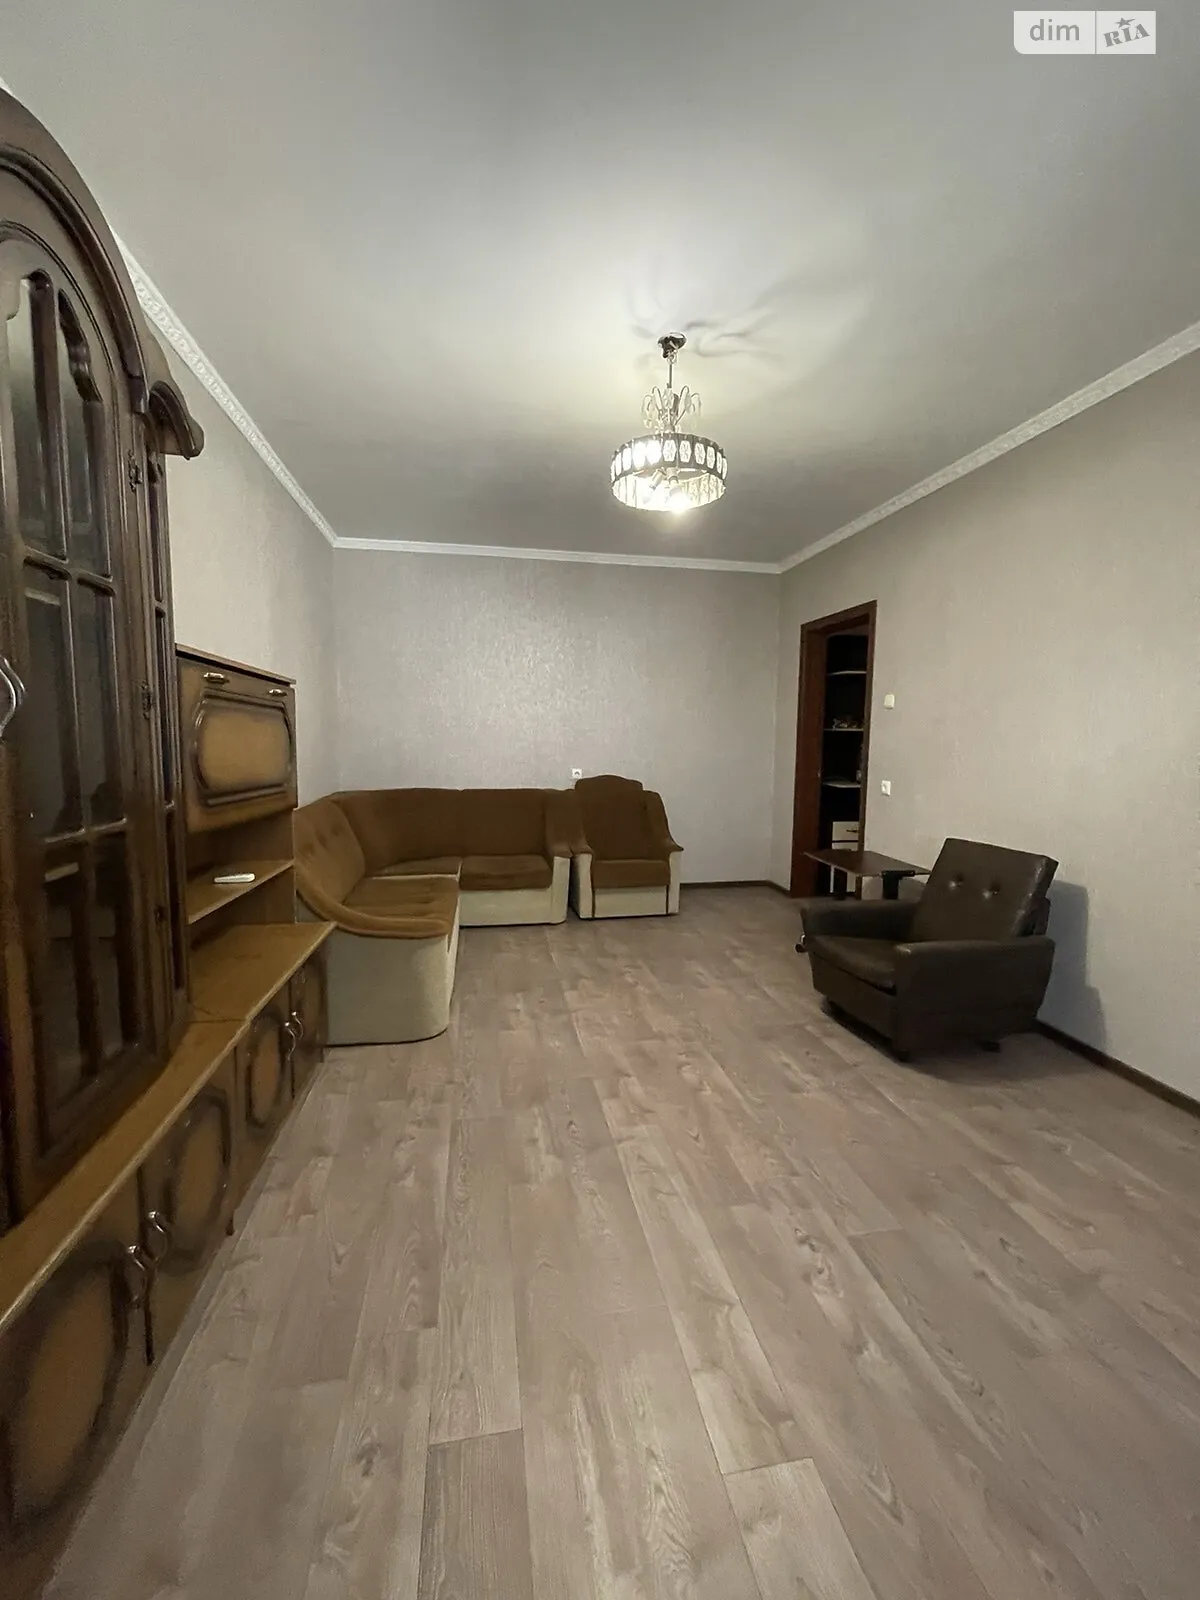 Сдается в аренду 2-комнатная квартира 54.5 кв. м в Николаеве - фото 3